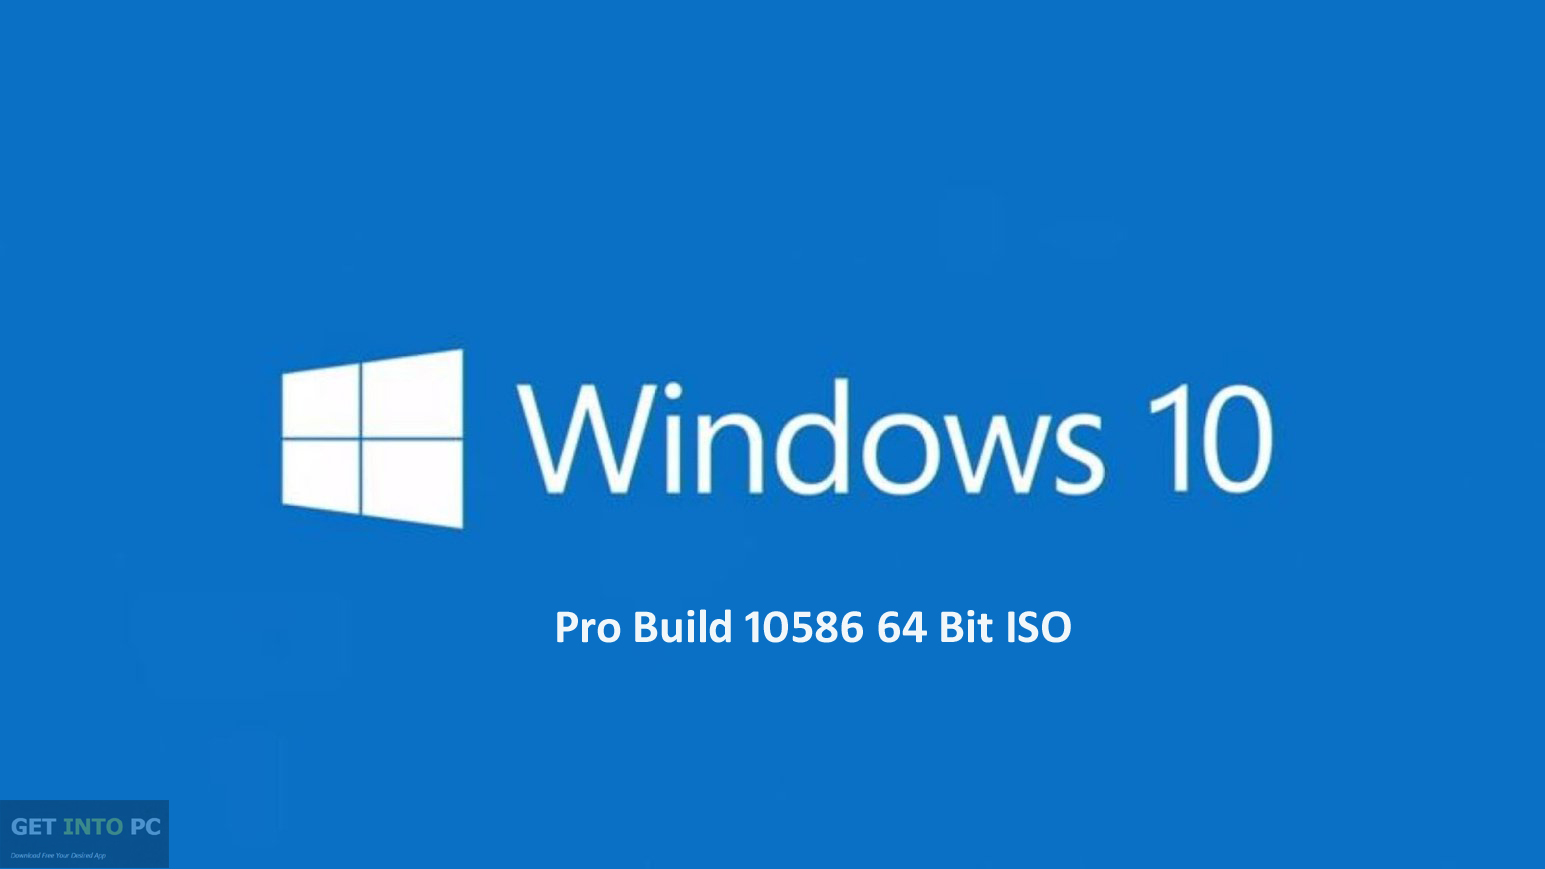 windows 10 download iso 64 bit full version 2018 free